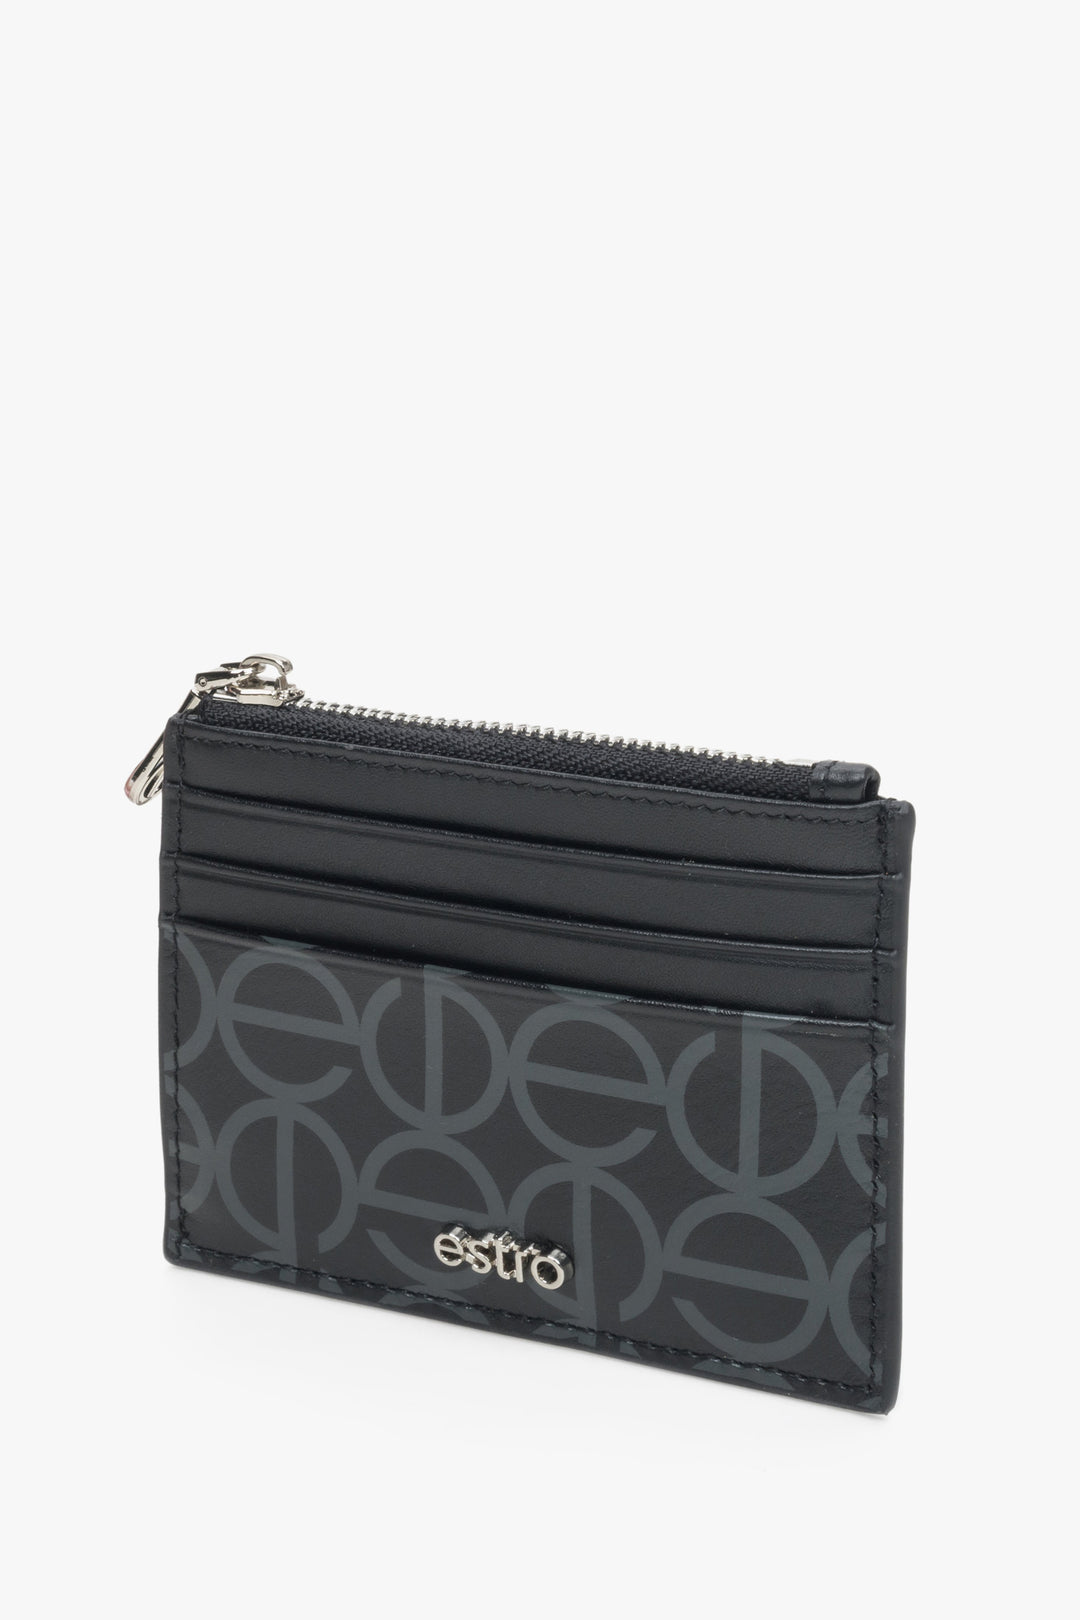 Leather, jet set wallet women's black by Estro.